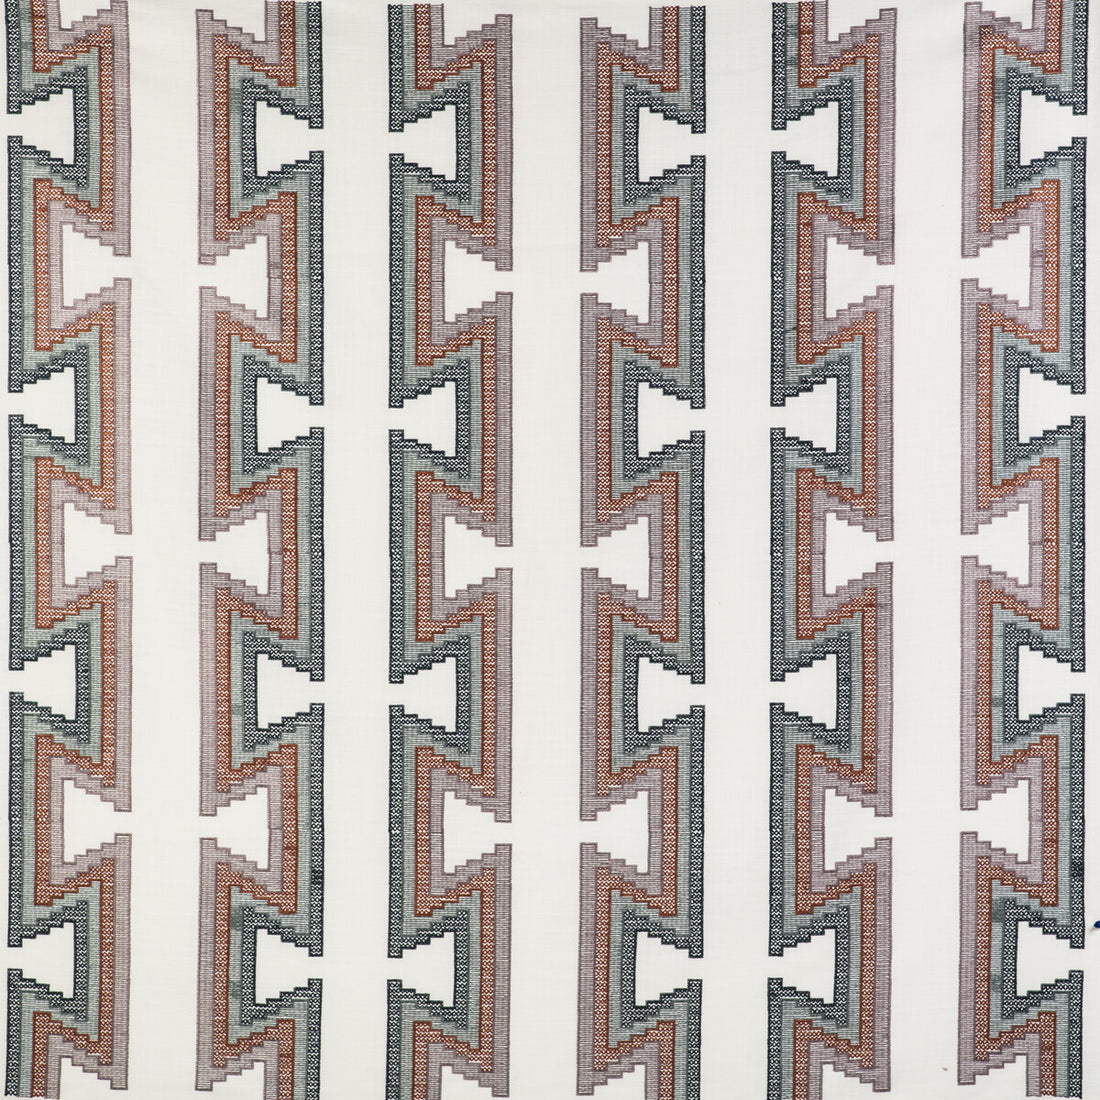 Trazo fabric in oceano/brique color - pattern GDT5546.001.0 - by Gaston y Daniela in the Gaston Libreria collection